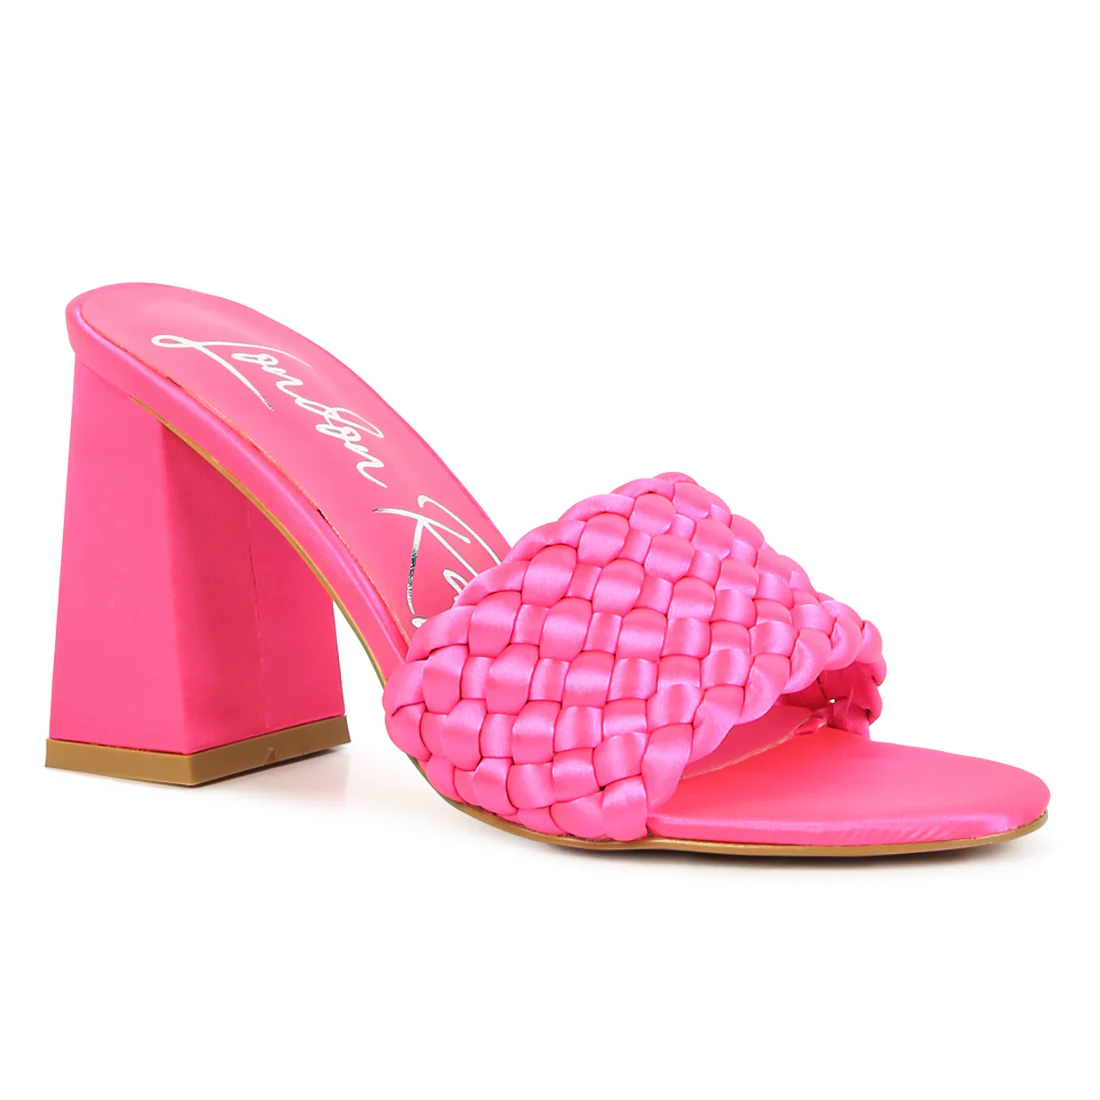 Sandal blok satin merah muda